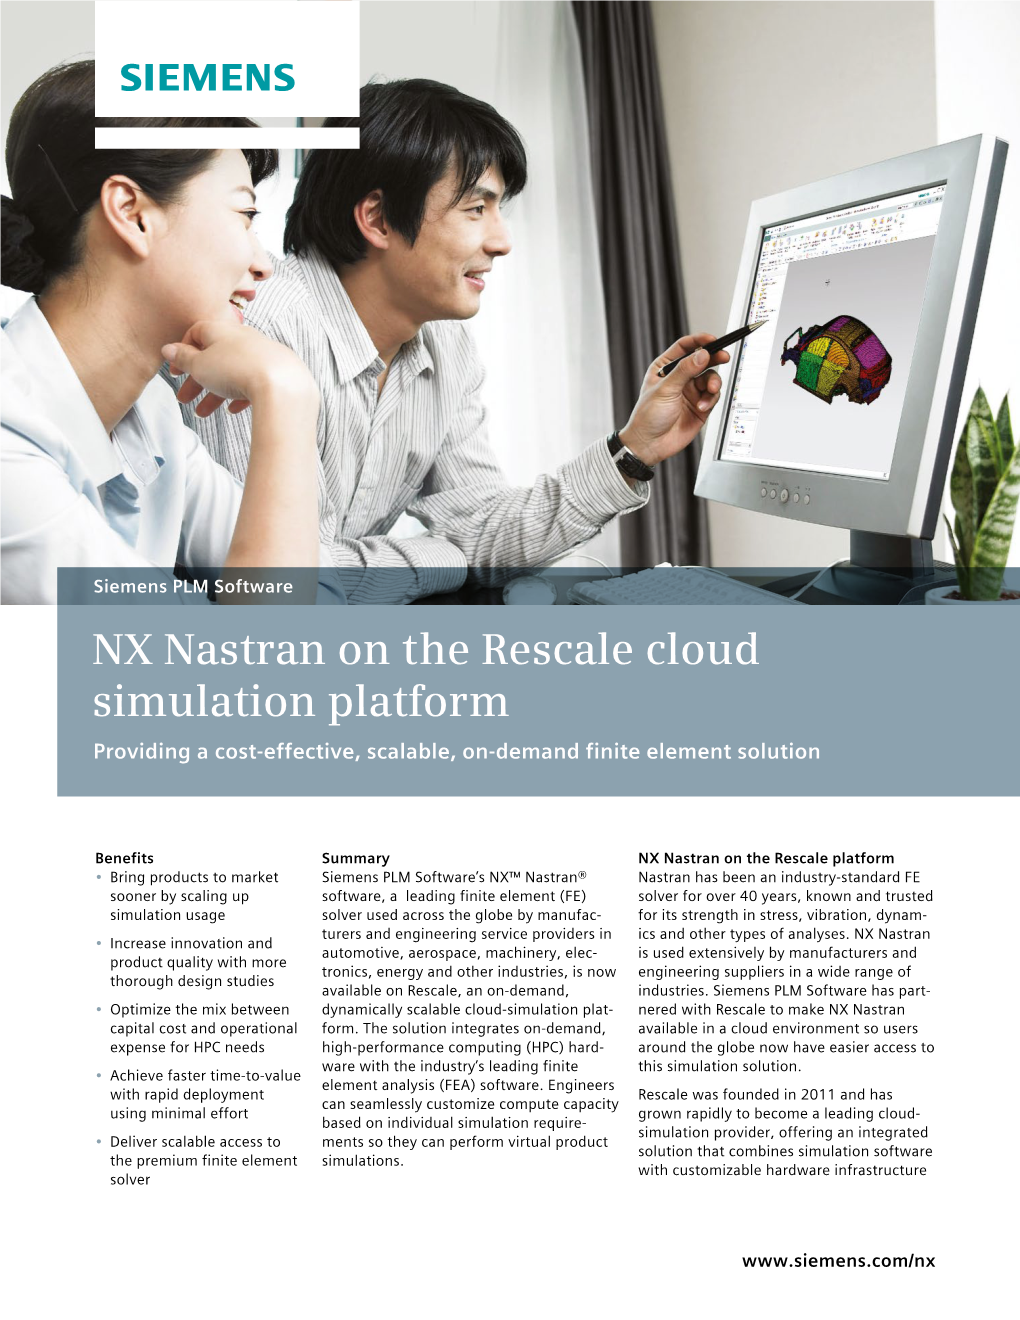 NX Nastran on the Rescale Cloud Environment Fact Sheet